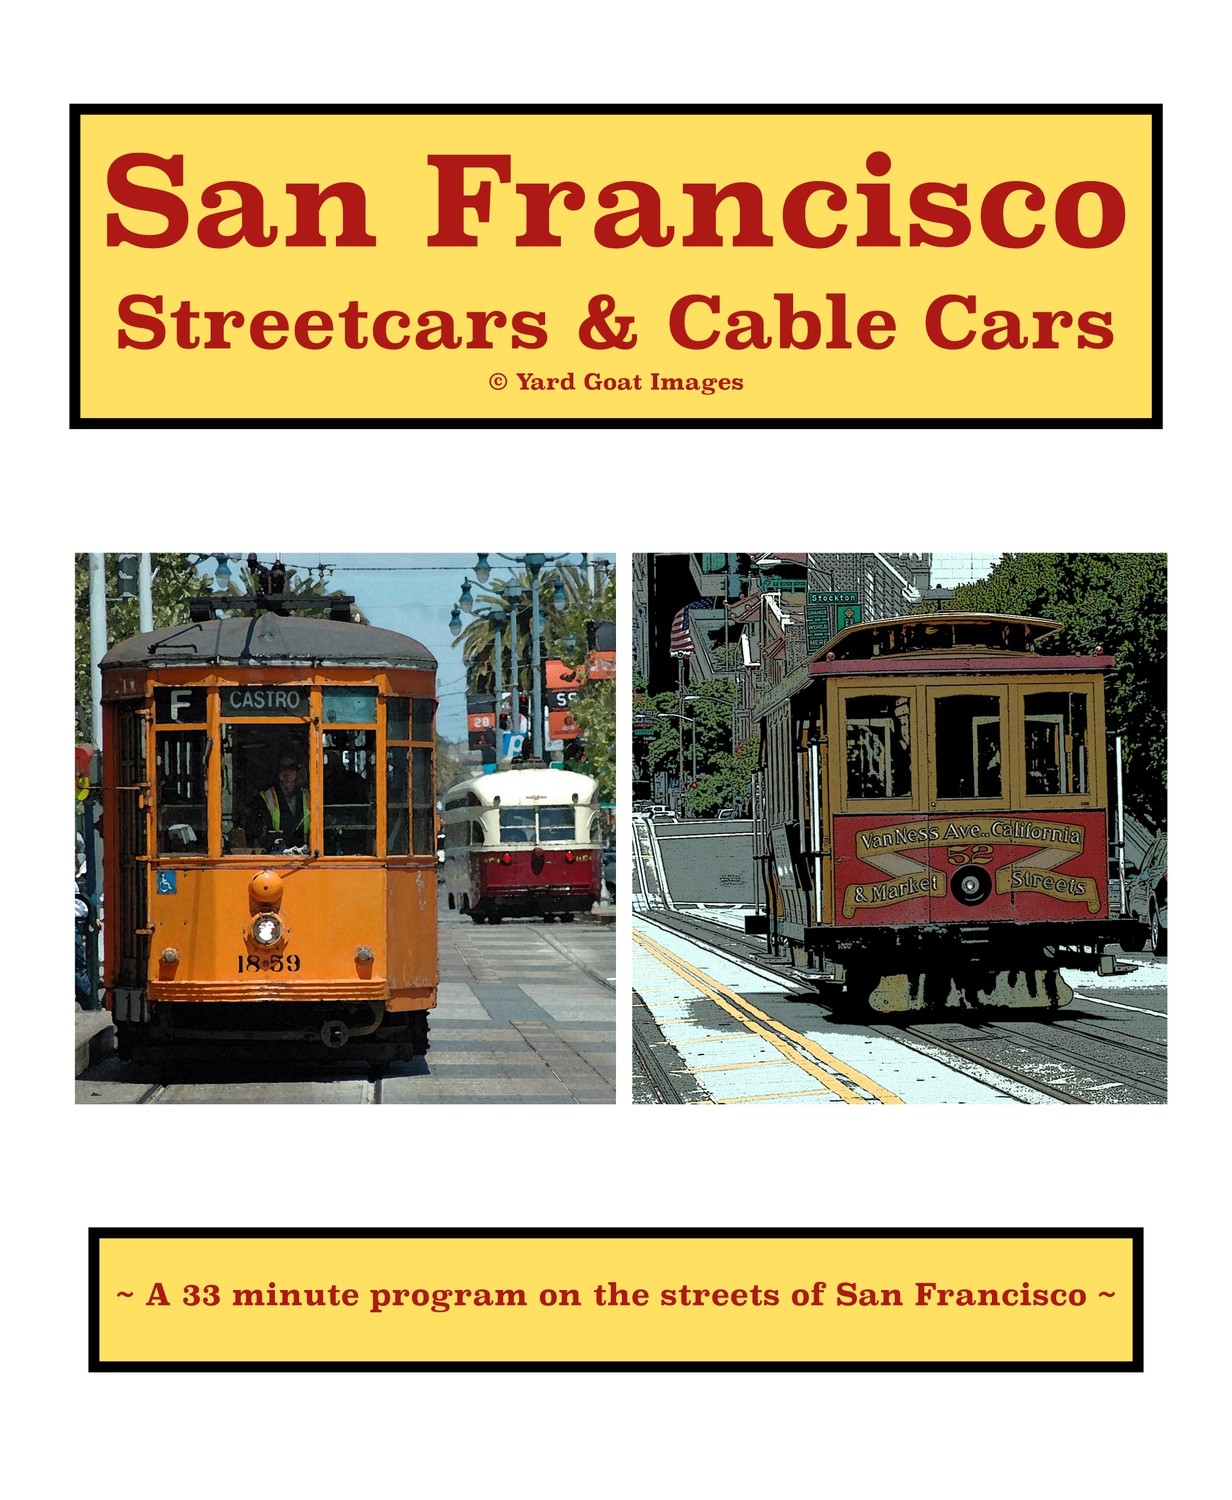 San Francisco Streetcars & Cable Cars